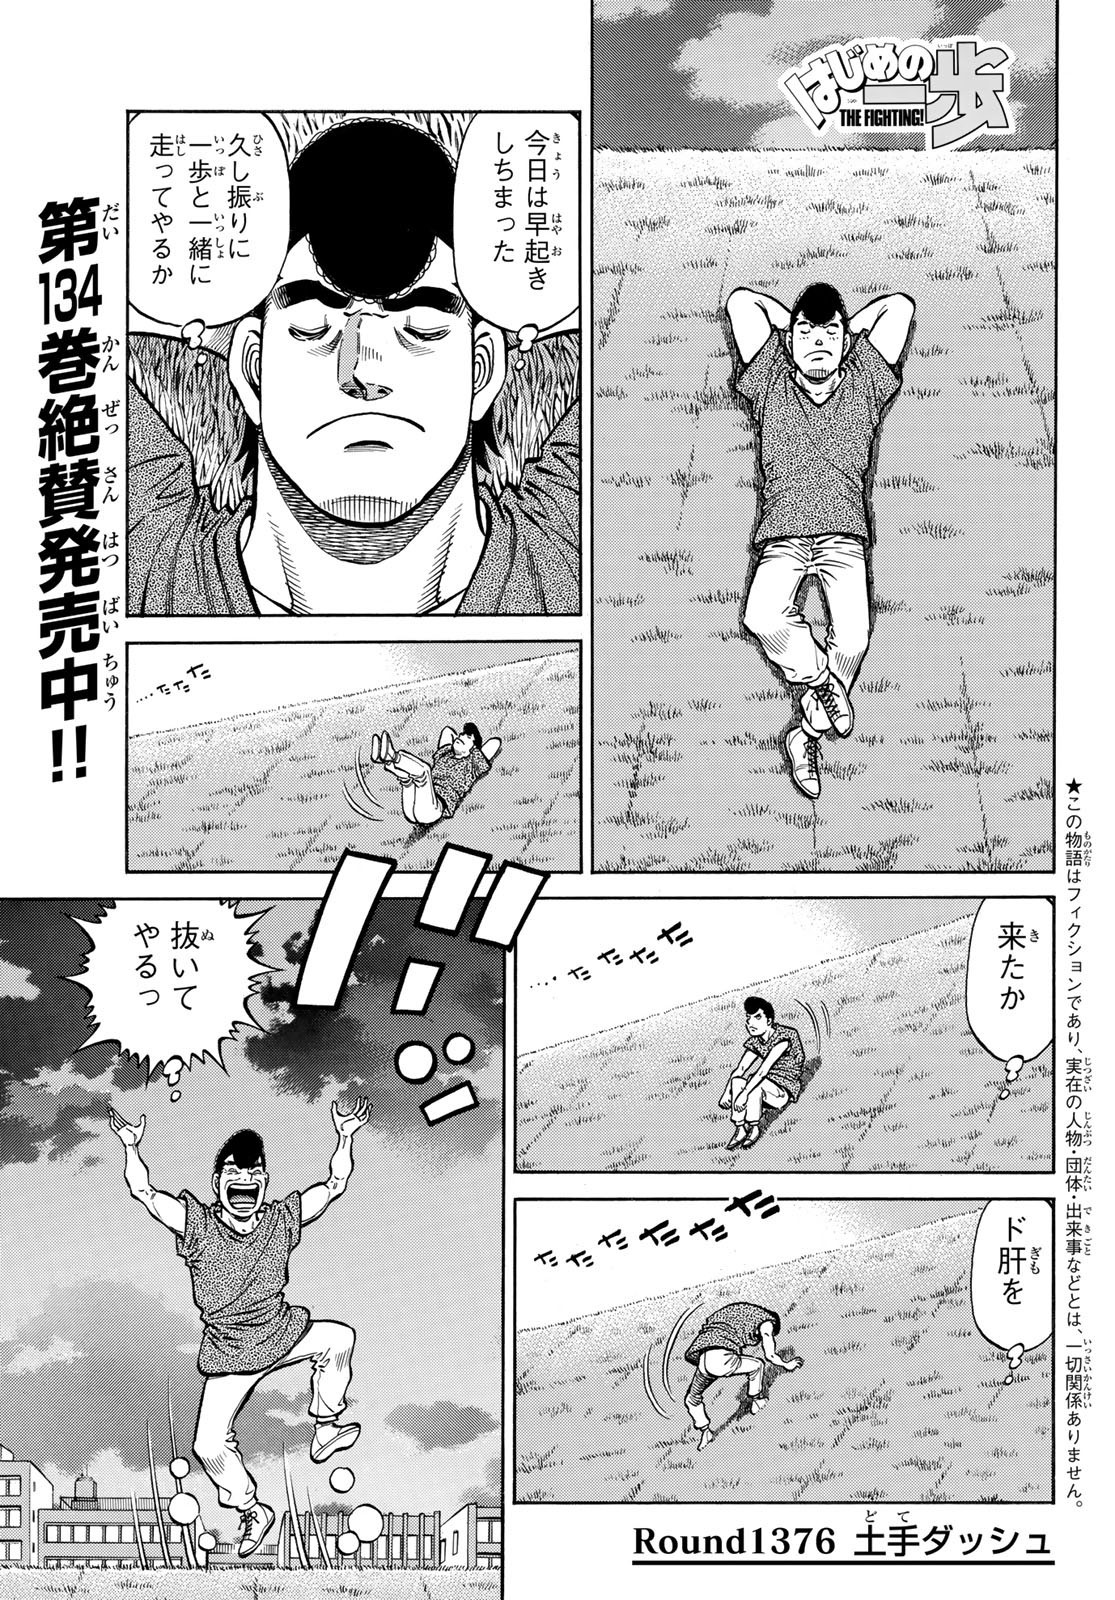 Hajime no Ippo - Chapter 1376 - Page 1